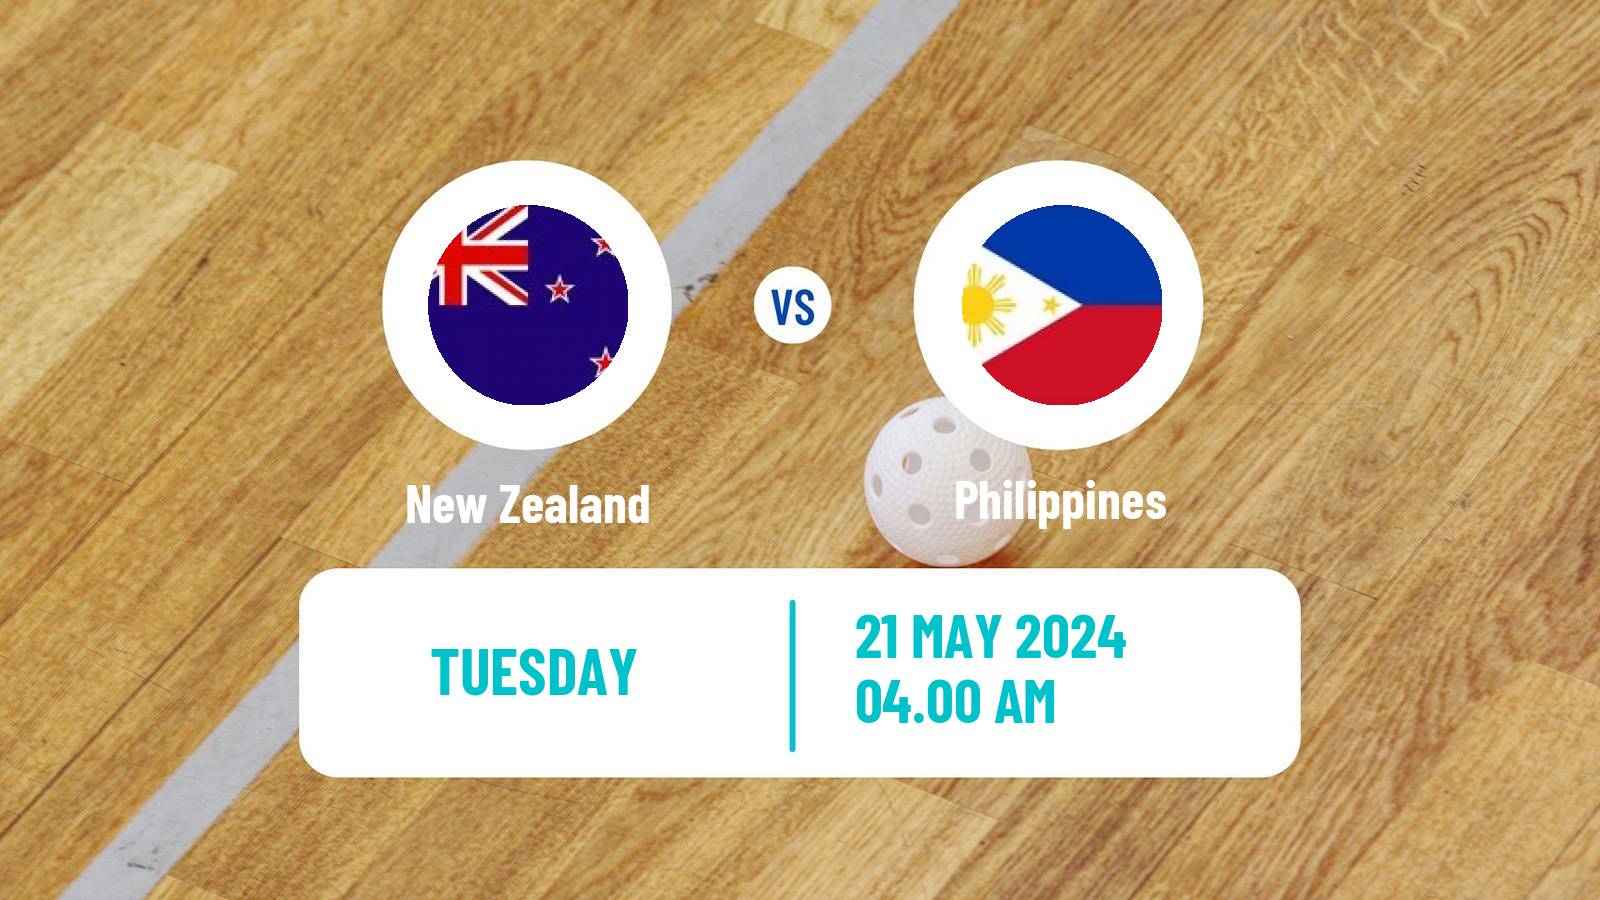 Floorball World Championship Floorball New Zealand - Philippines